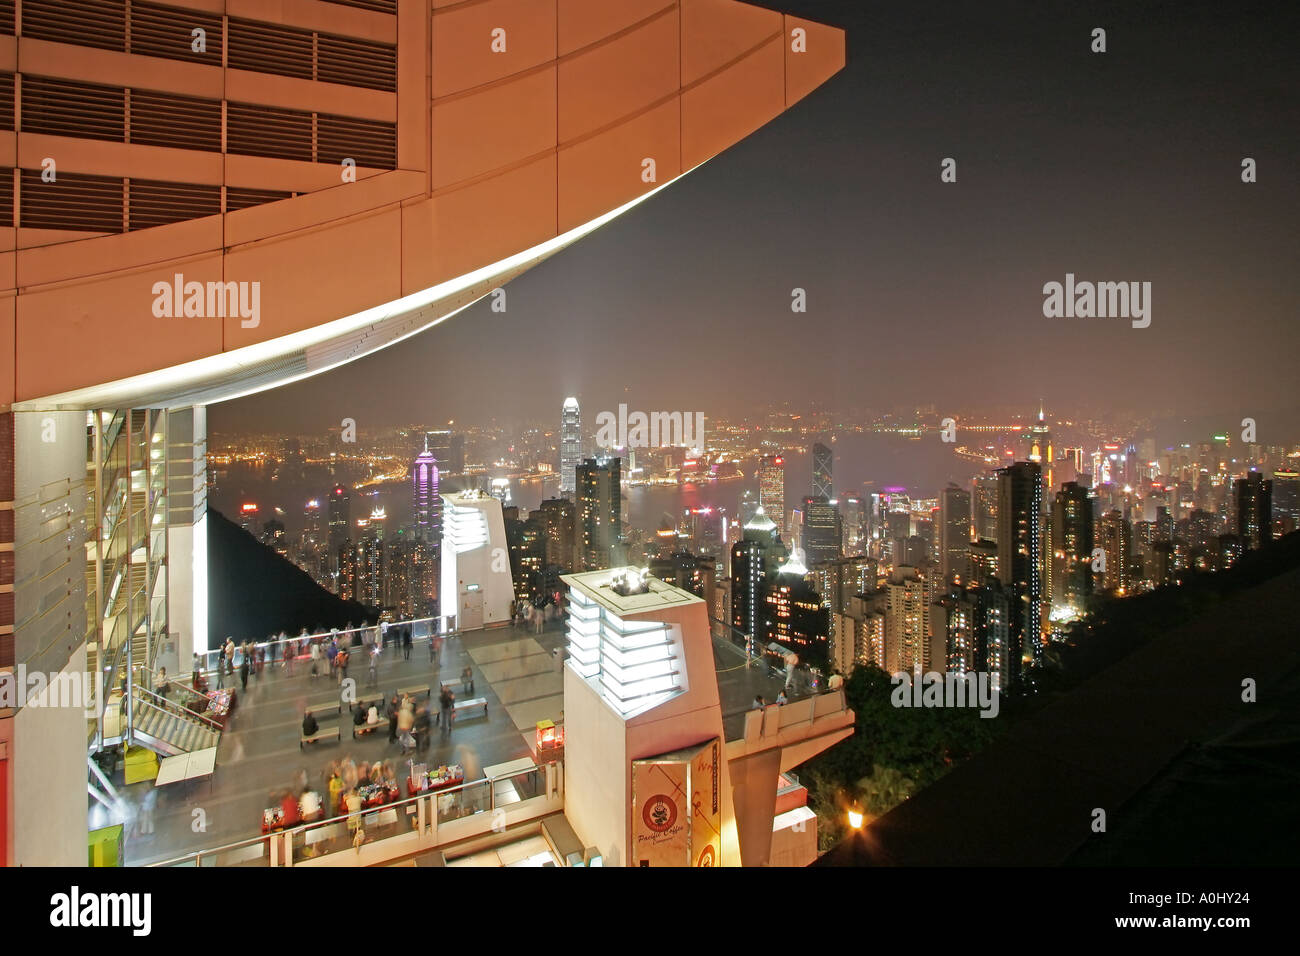 China Hong Kong Insel Victoria Peak Tower Punkt Skyline Personen Panorama anzeigen Stockfoto